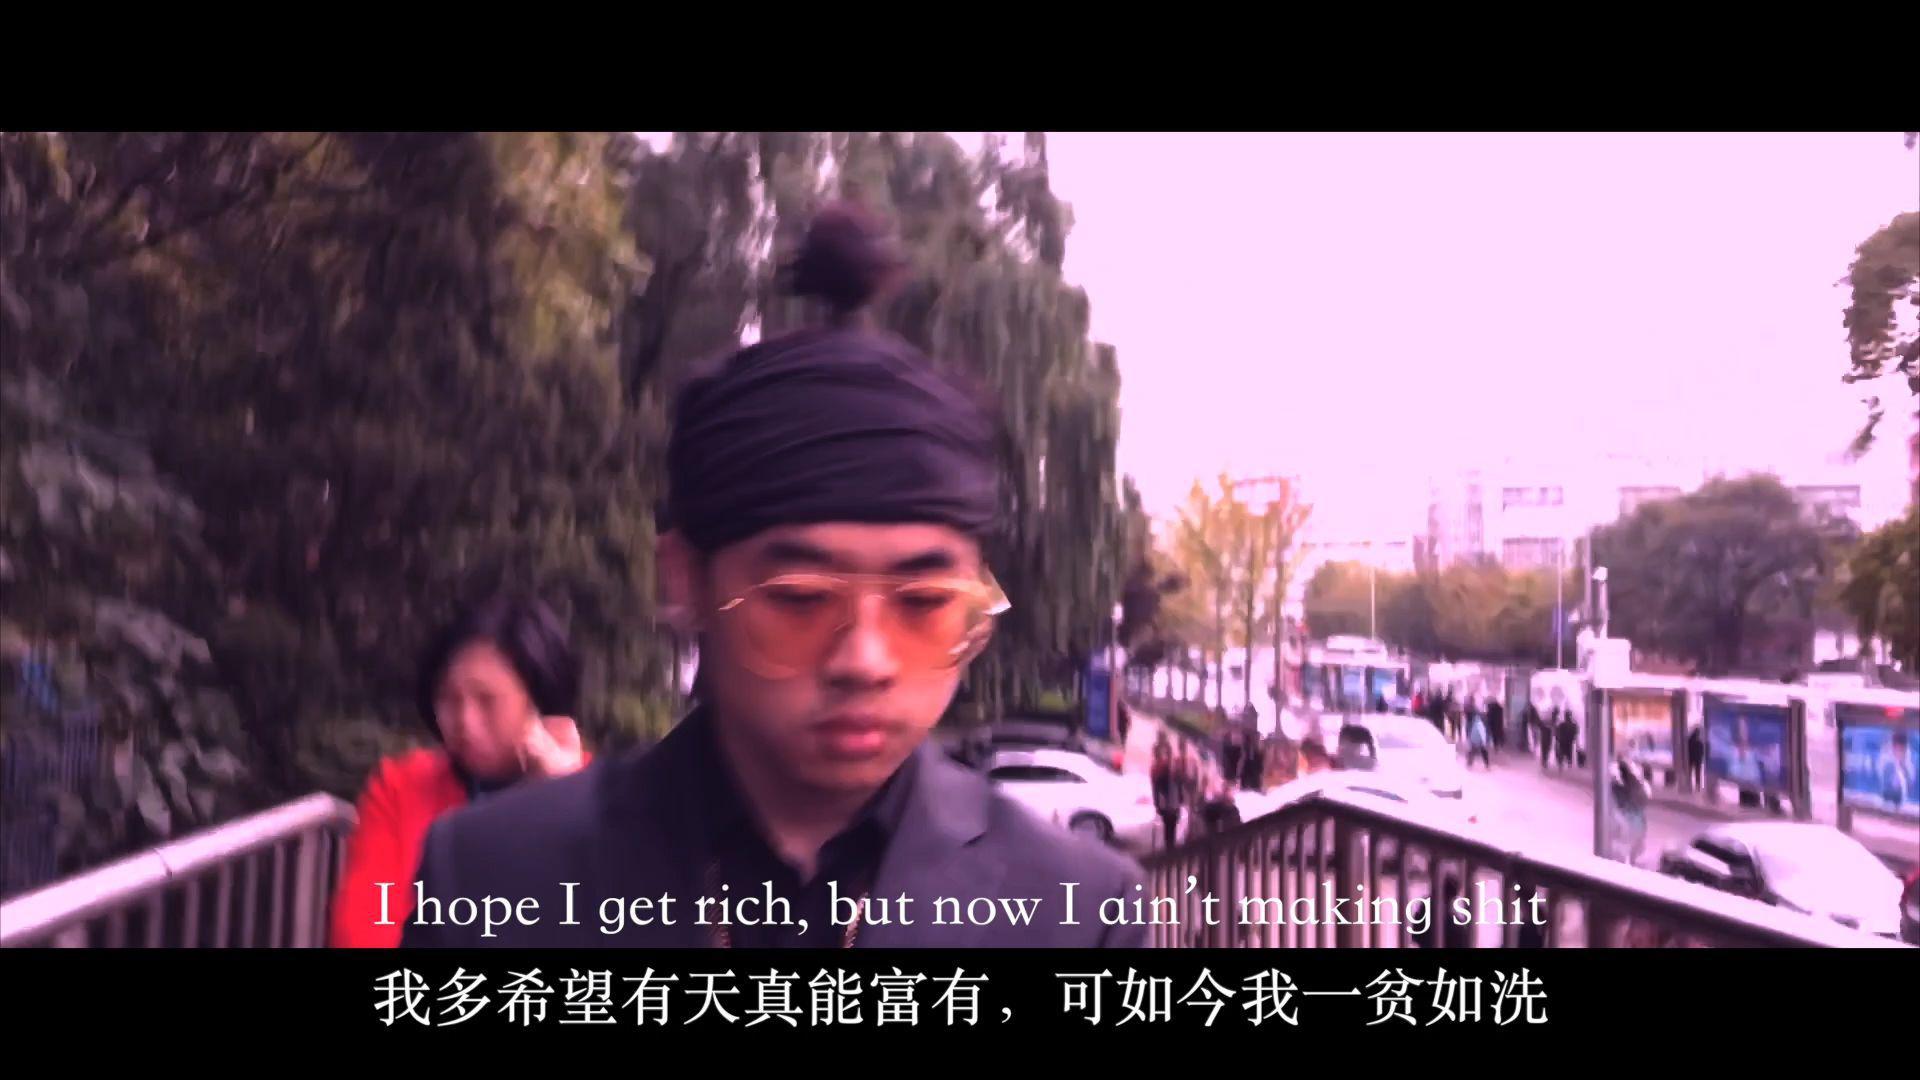 Beijing Daddy's Former Shell - Same Kid 大号儿童（Low-budget Lyrics Video）